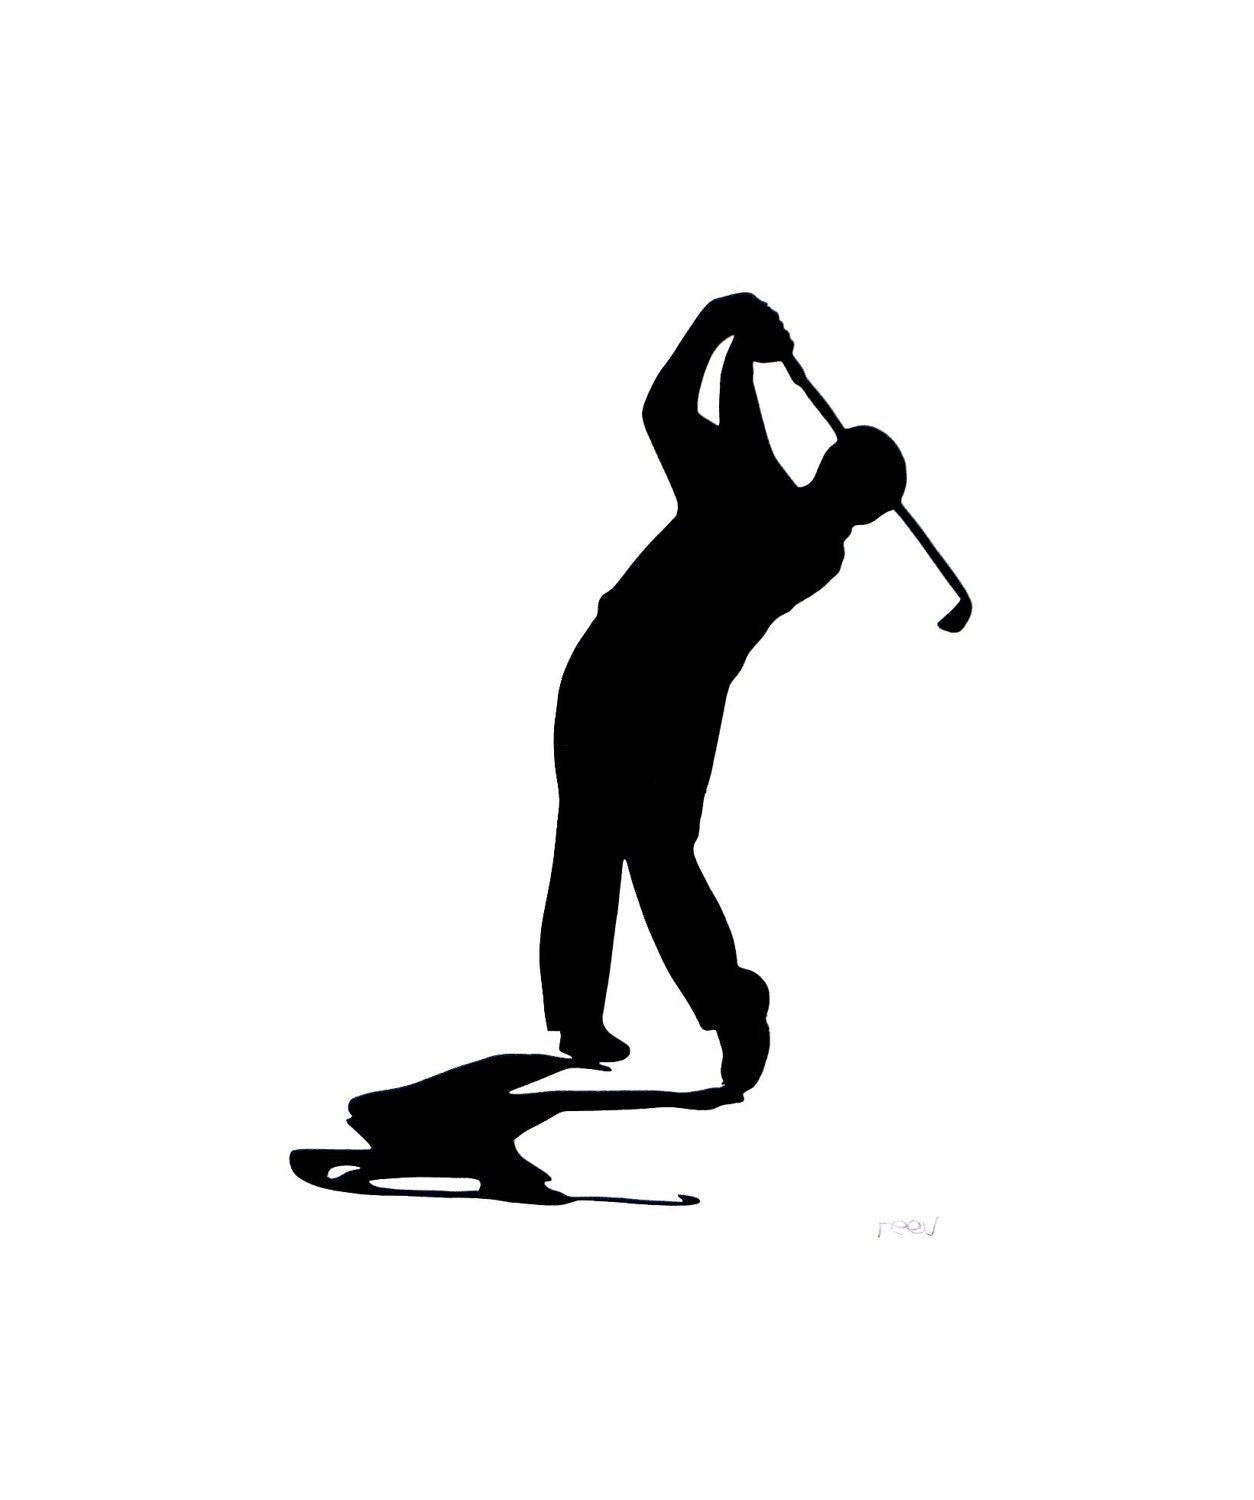 Golf Bag Silhouette